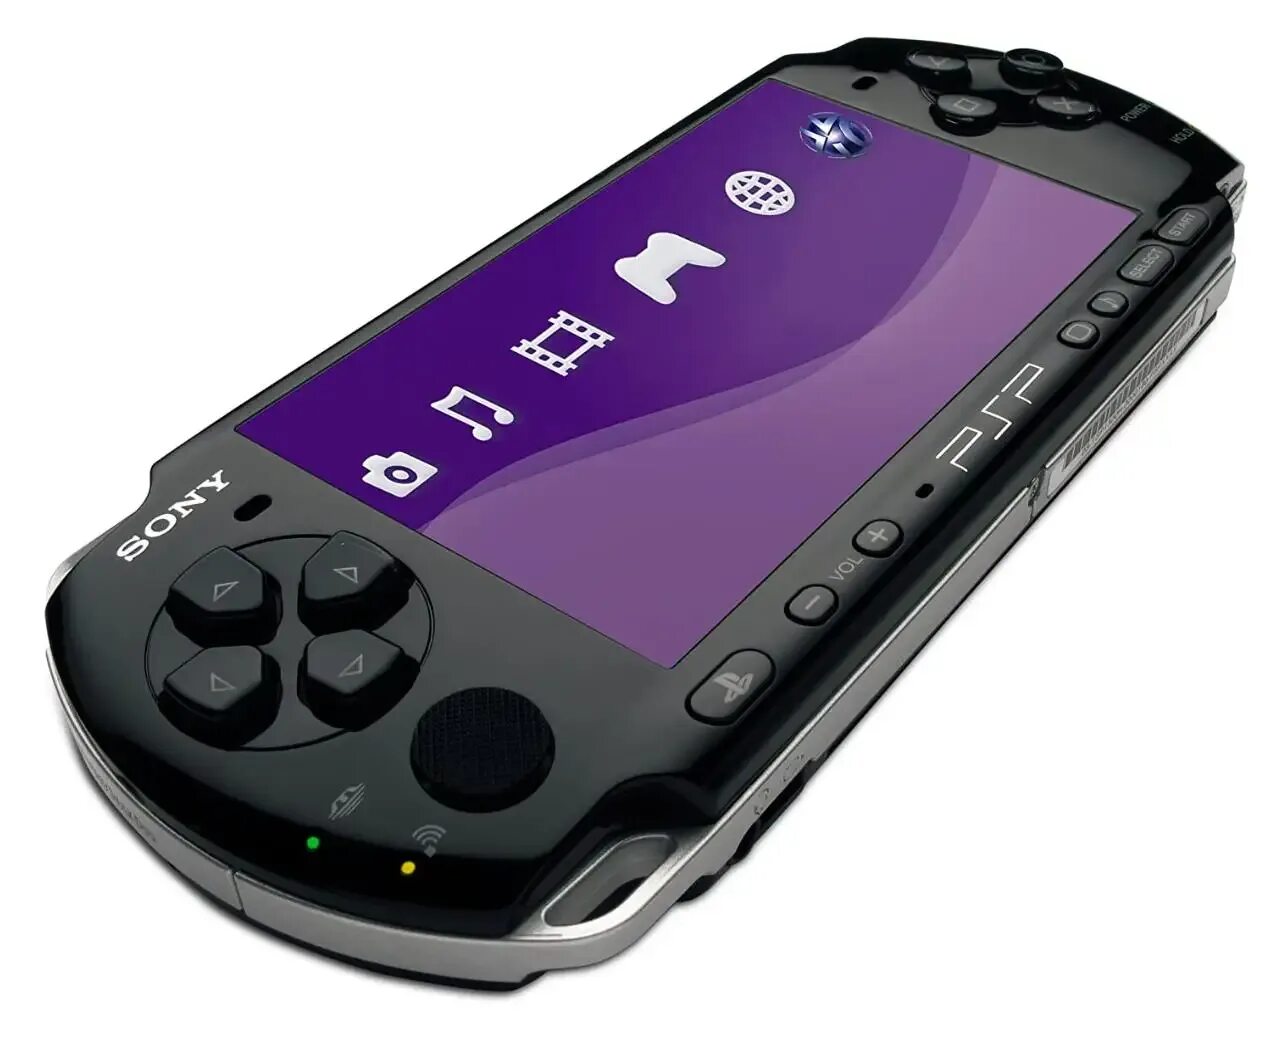 Sony PLAYSTATION Portable PSP 3000. Sony PLAYSTATION Portable Slim & Lite PSP-3000. Sony PLAYSTATION Portable PSP 1000. Сони ПСП 3004. Псп челябинск